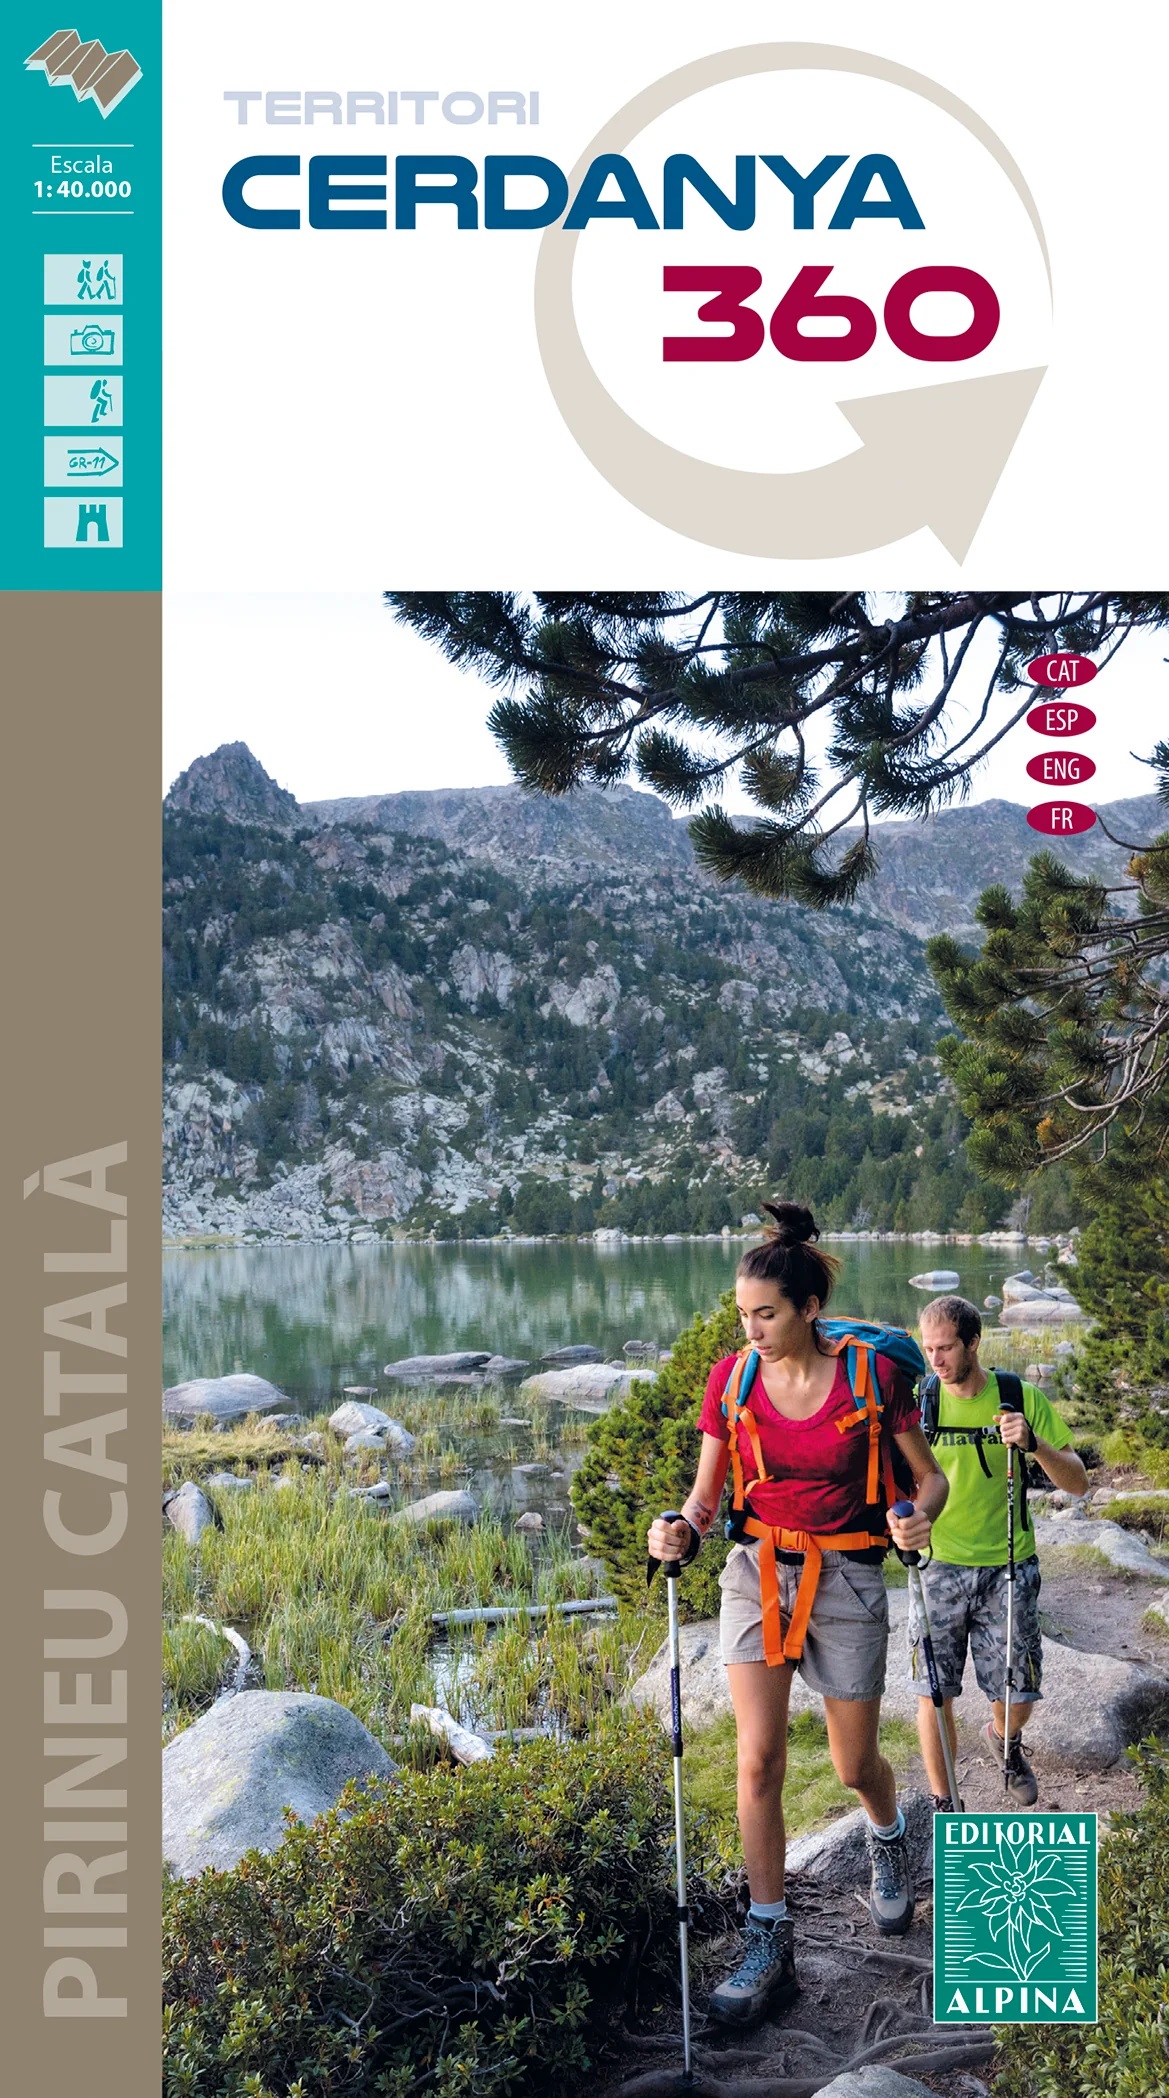 Online bestellen: Wandelkaart Cerdanya 360 - territori | Editorial Alpina